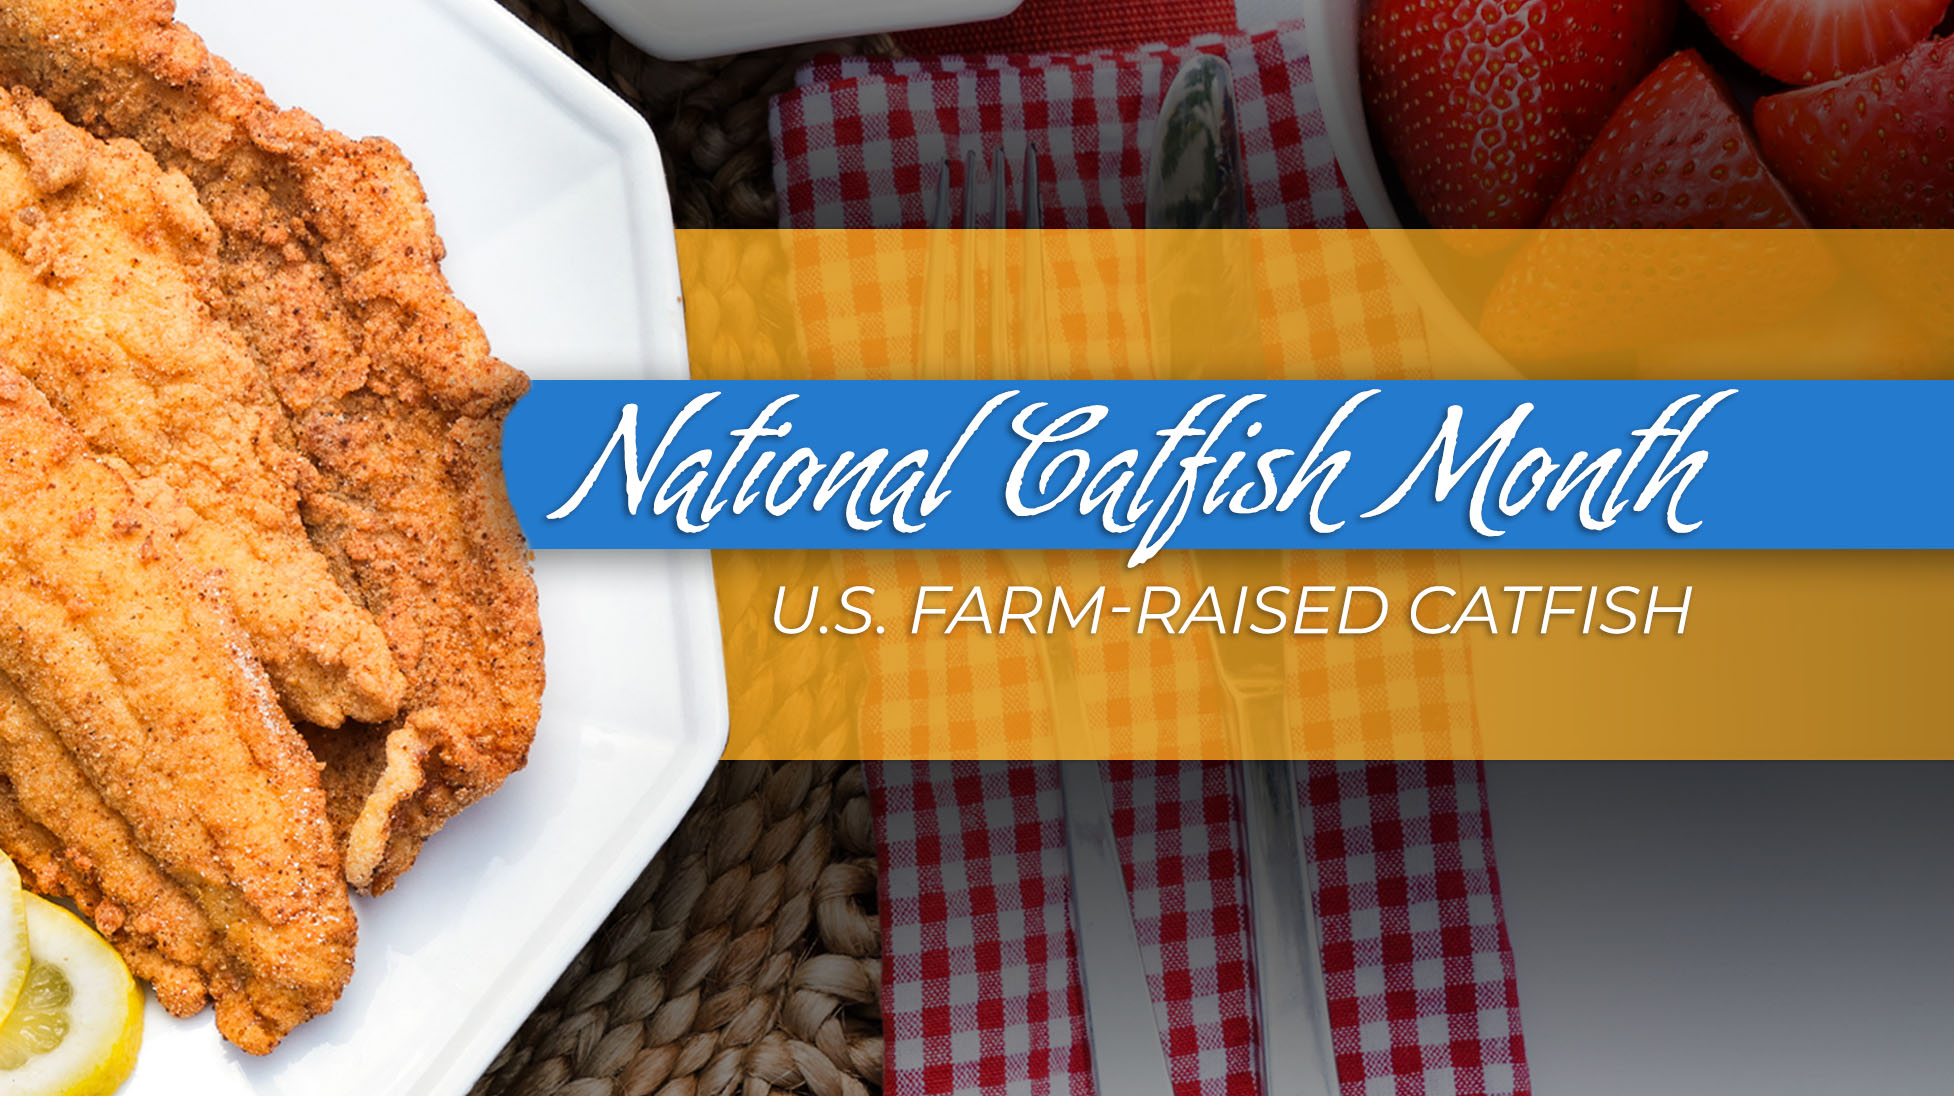 Celebrate National Catfish Month with Heartland Catfish Company